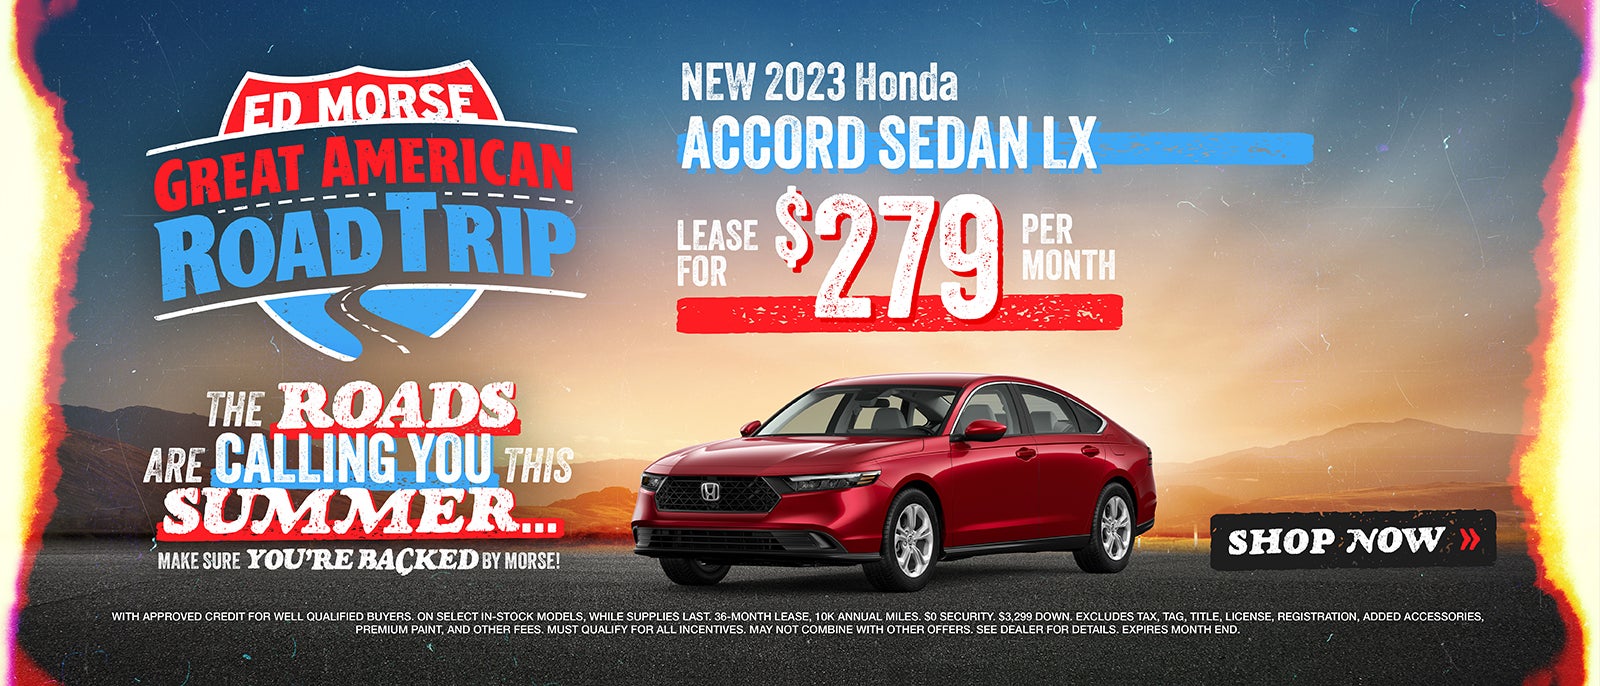 New 2023 Honda Accord Sedan lx Lease for $279 per month